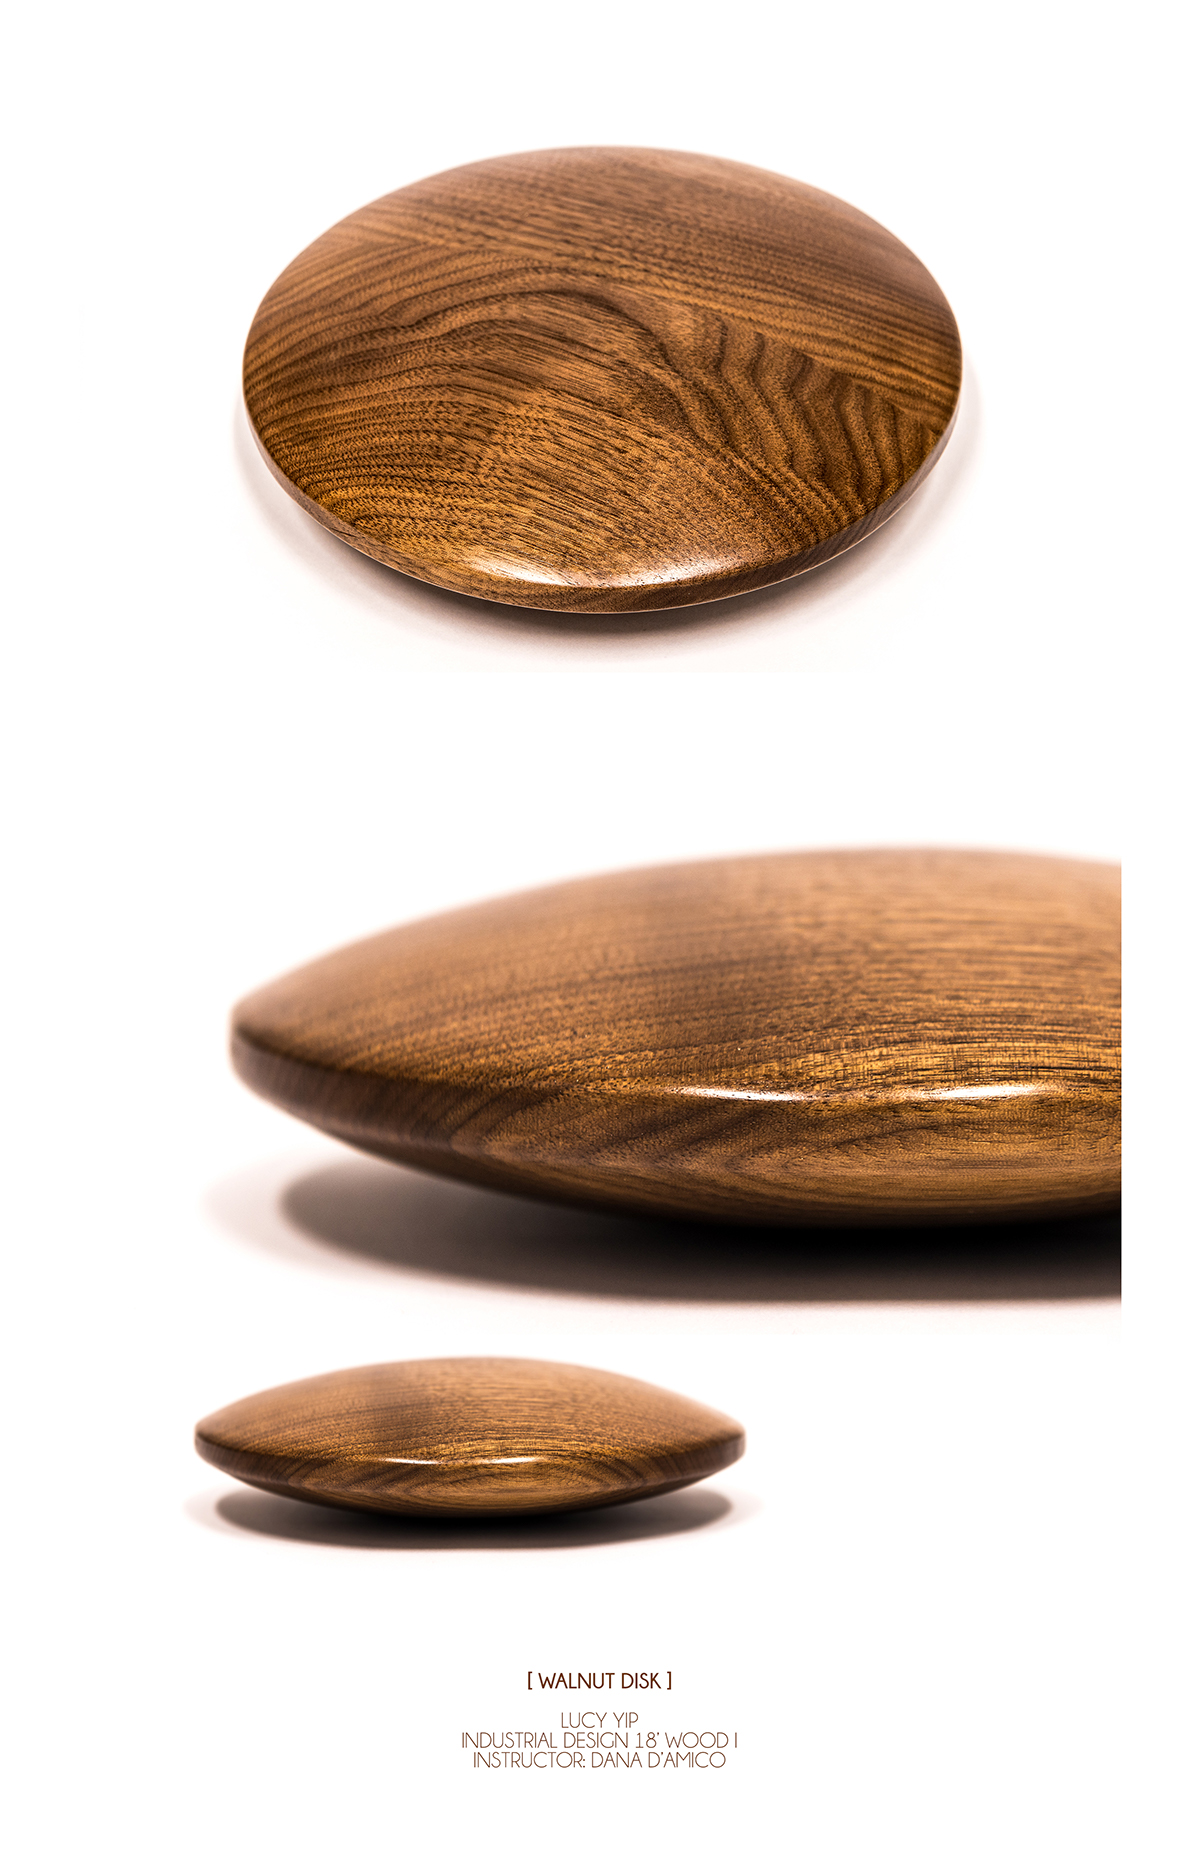 wood 1 wood Lamination veneer mask carved plant holder carnation walnut disk disk lathe turning walnut maple hand-made